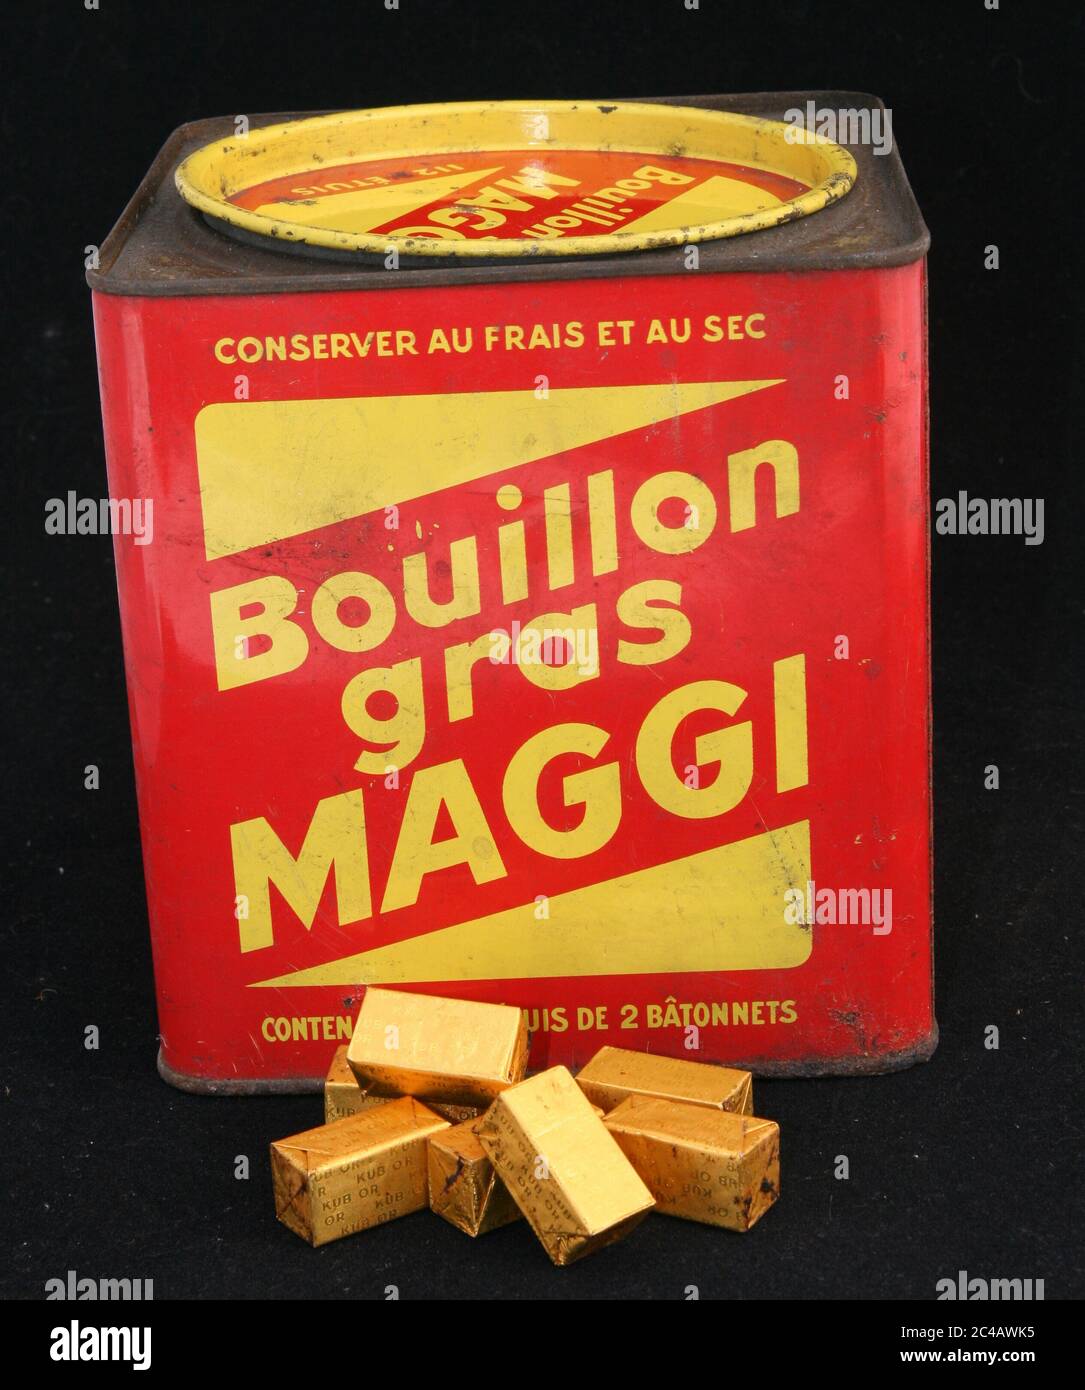 Boites de bouillon gras Maggi vers 1950 / Boxes of gras Maggi broth circa 1950 Stock Photo